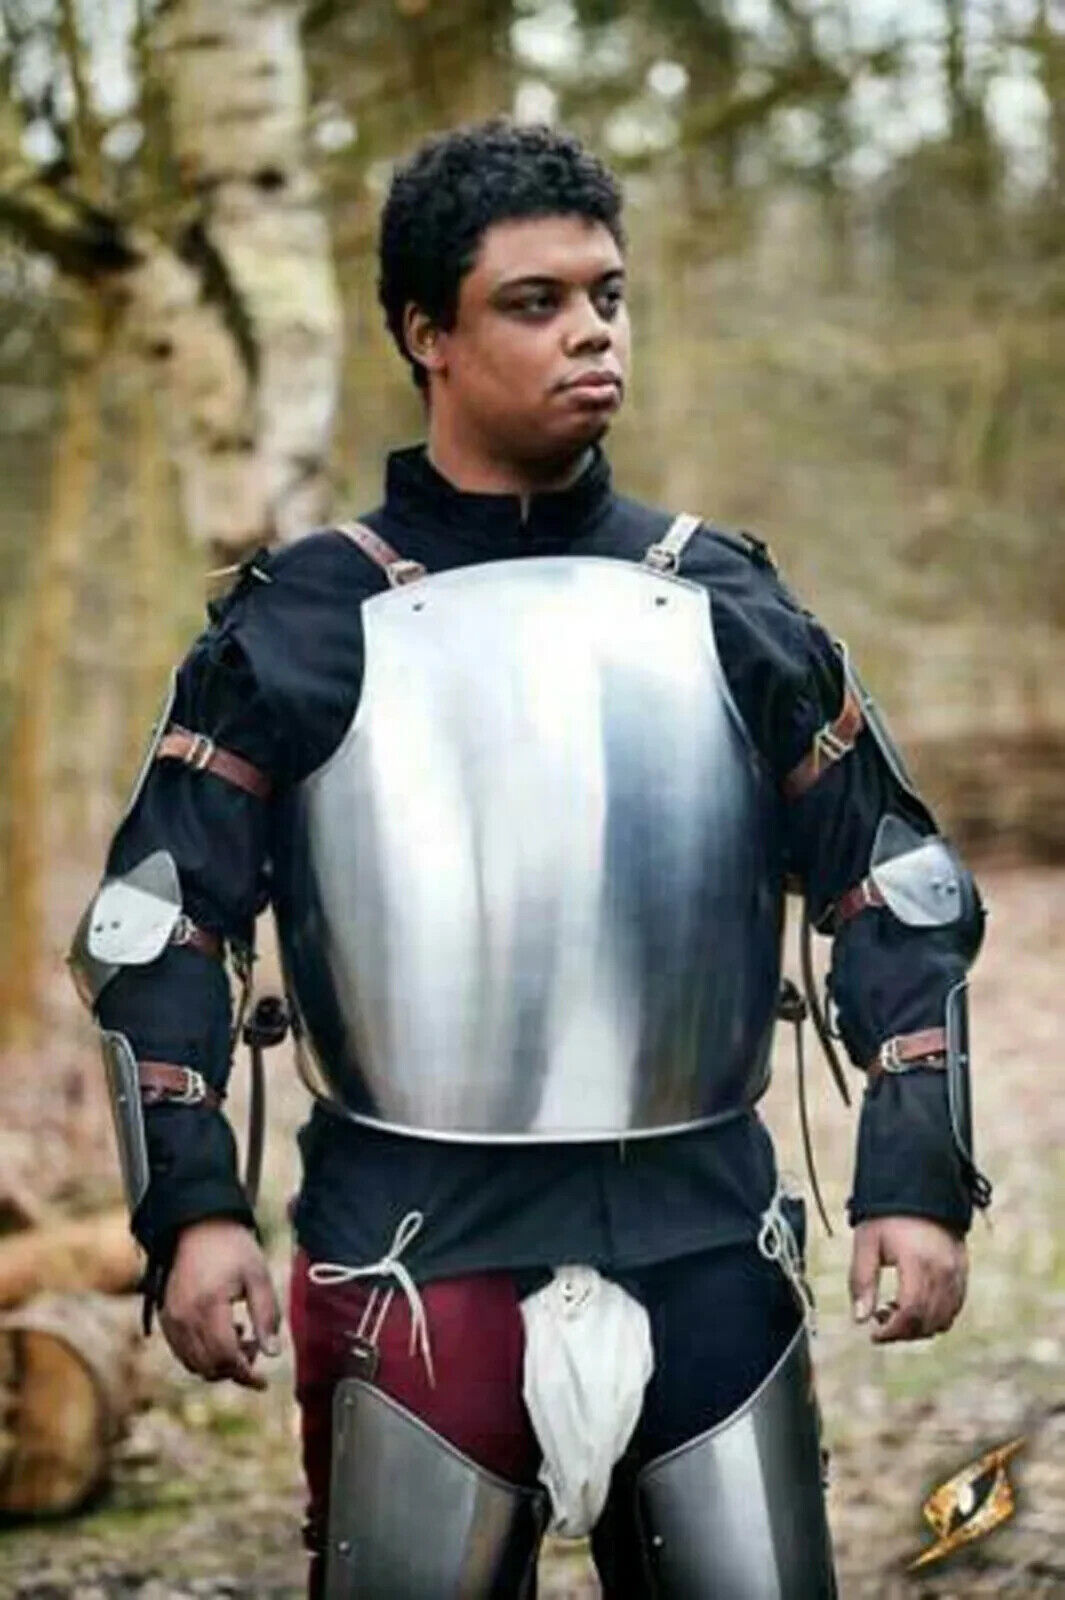 Medieval 16 gauge Soldiers Torso Polished Steel Cuirass Knight Breastplate Armor